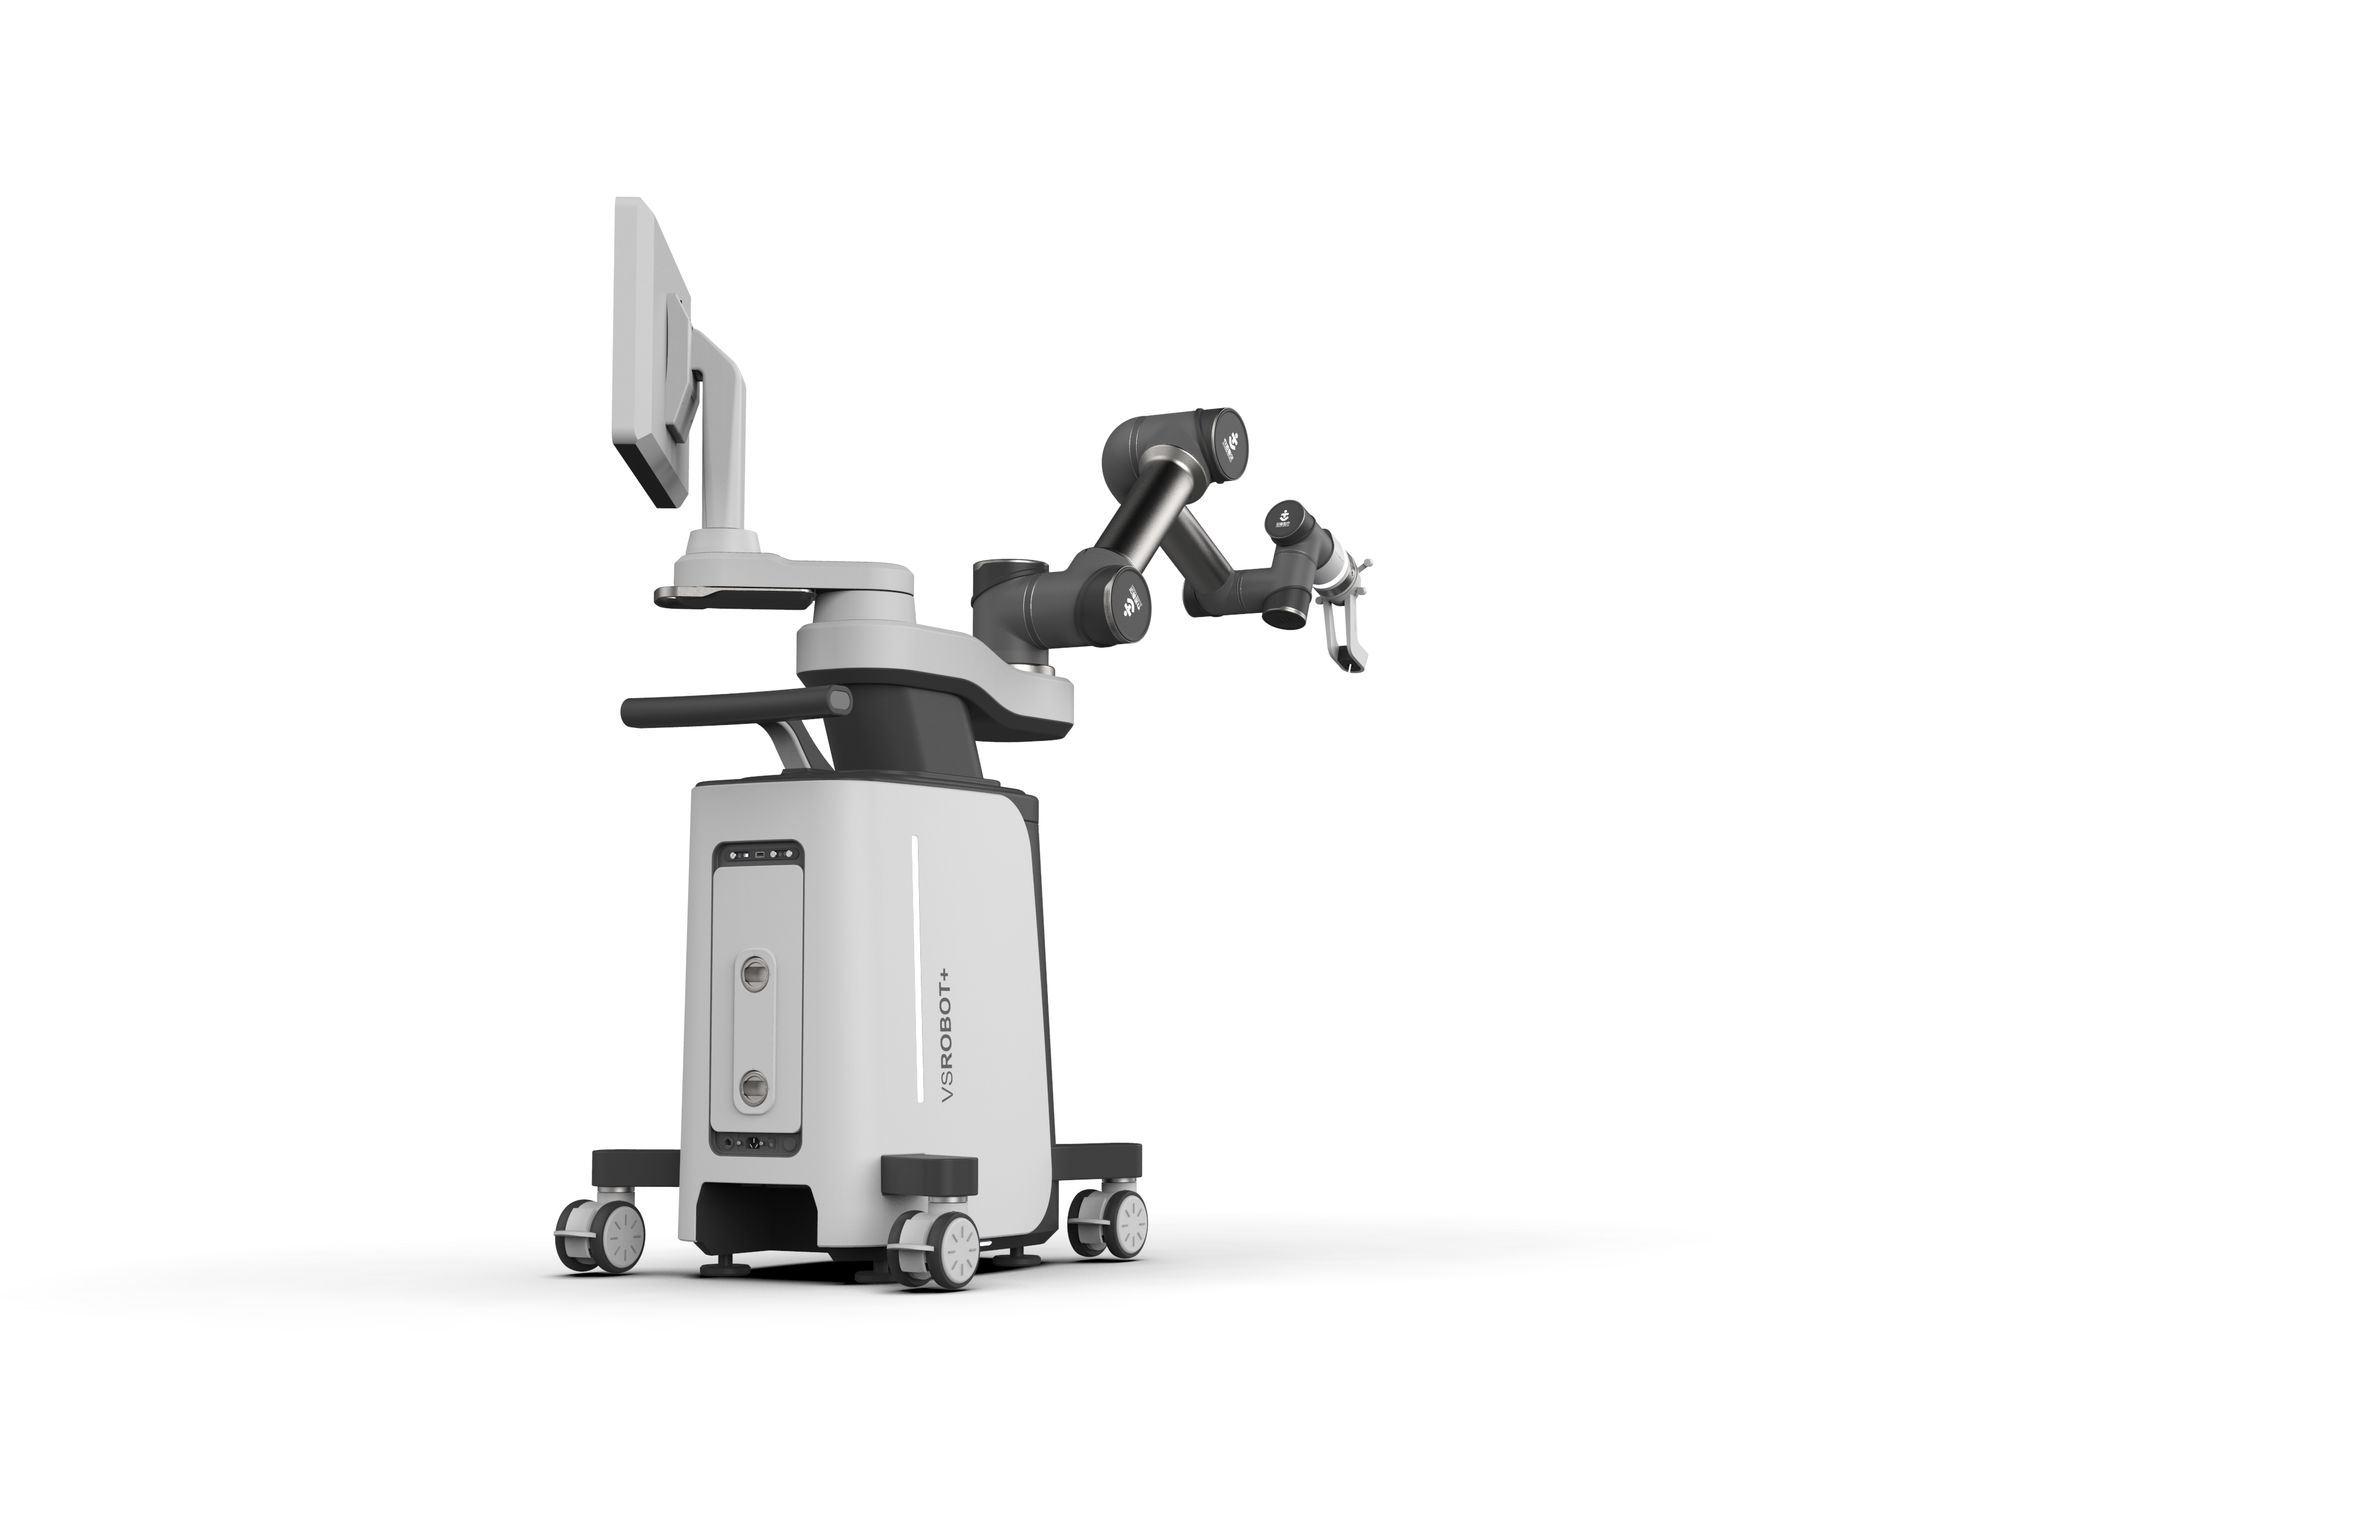 NS100 Orthopedic Robotic Surgery Platform